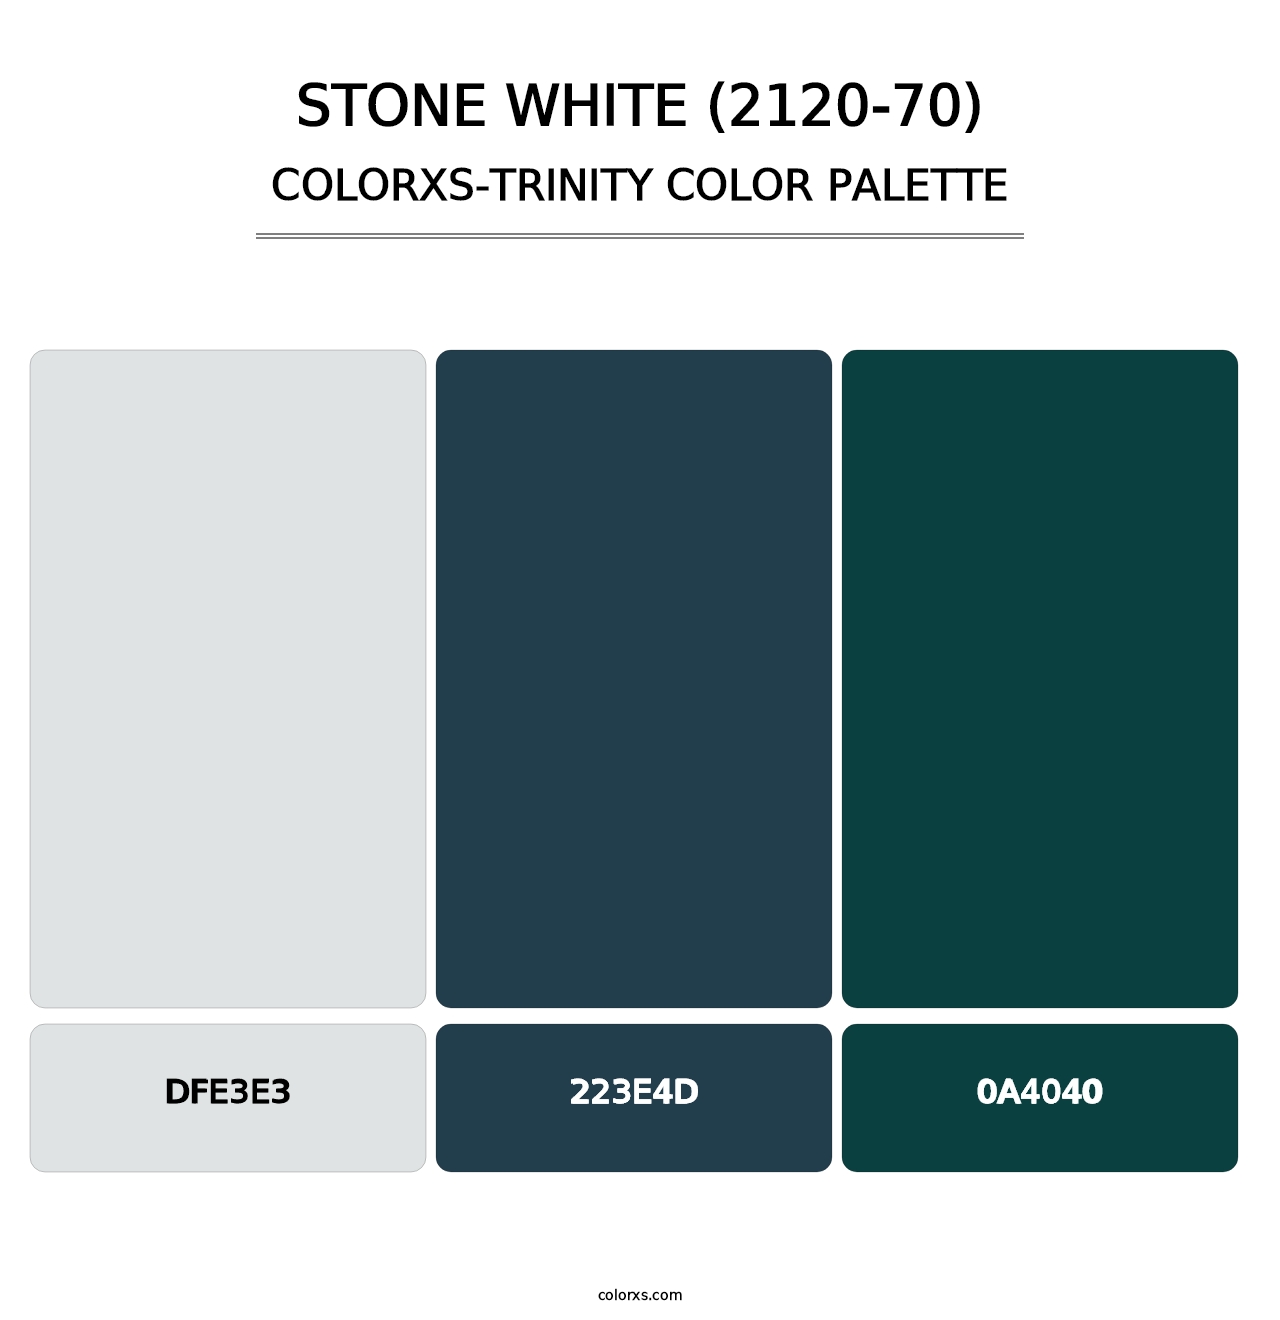 Stone White (2120-70) - Colorxs Trinity Palette